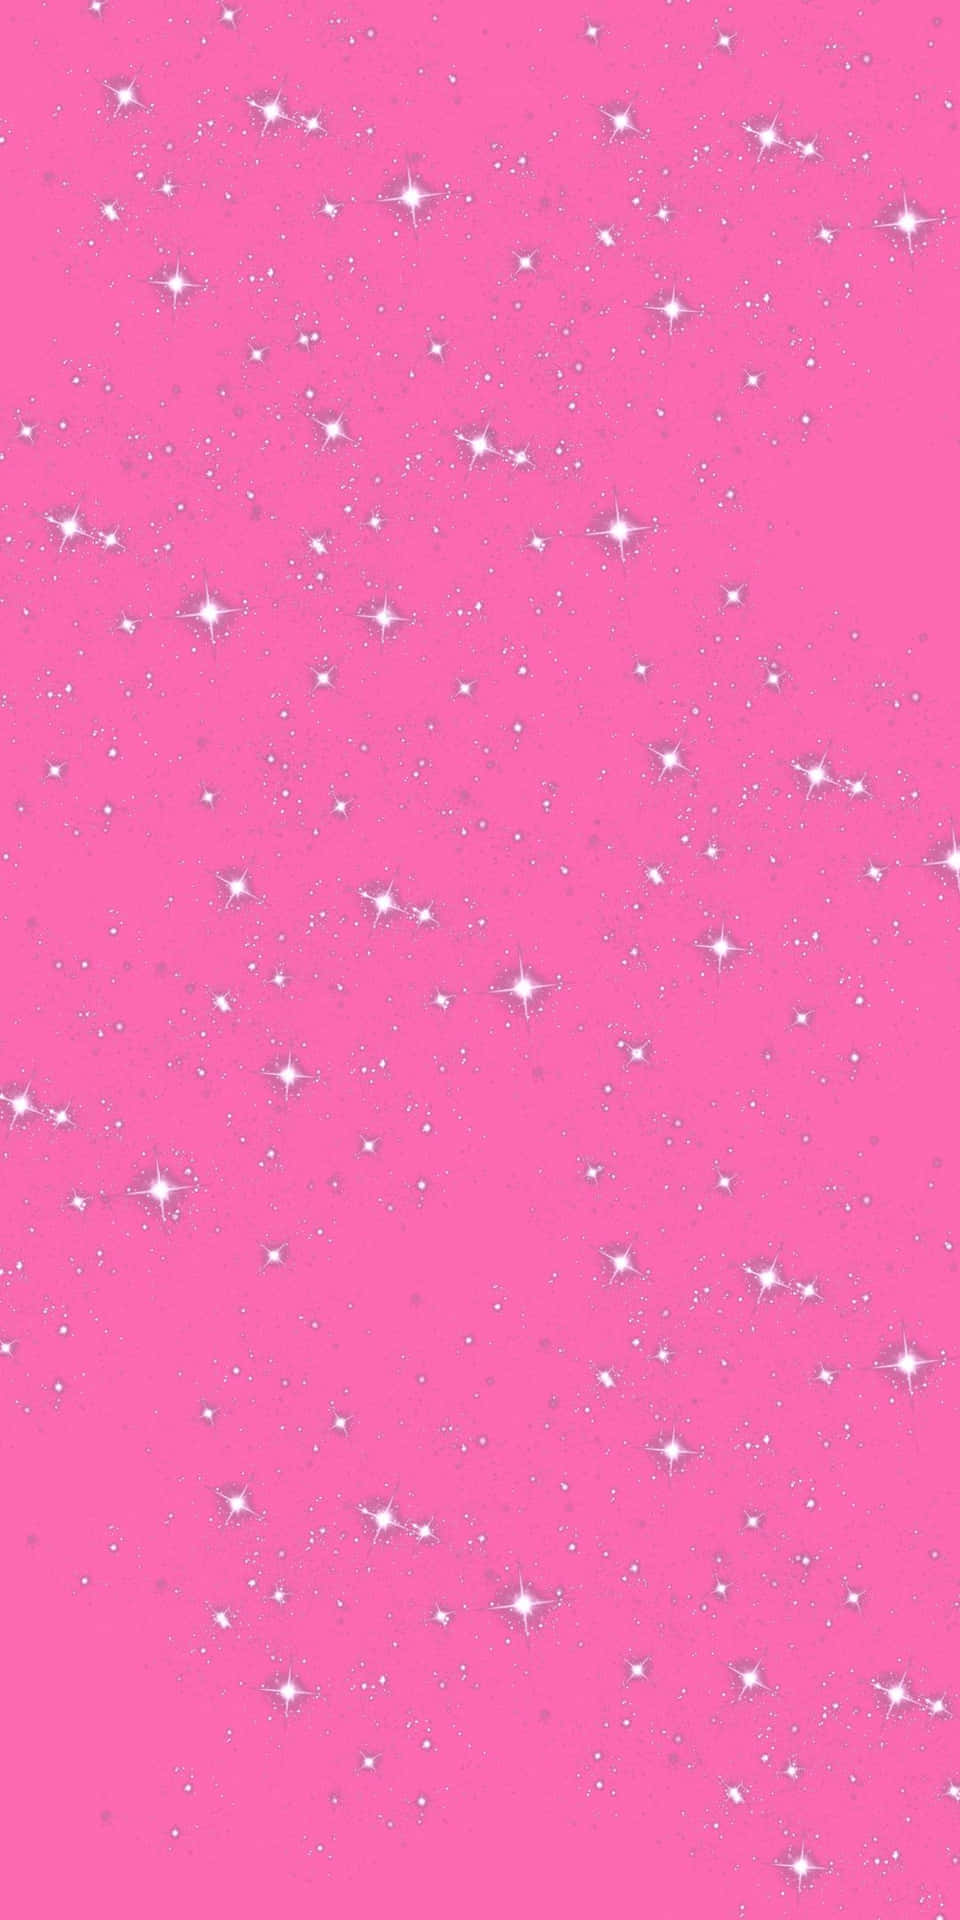 Vibrant Sparkly Pink Portrait Background